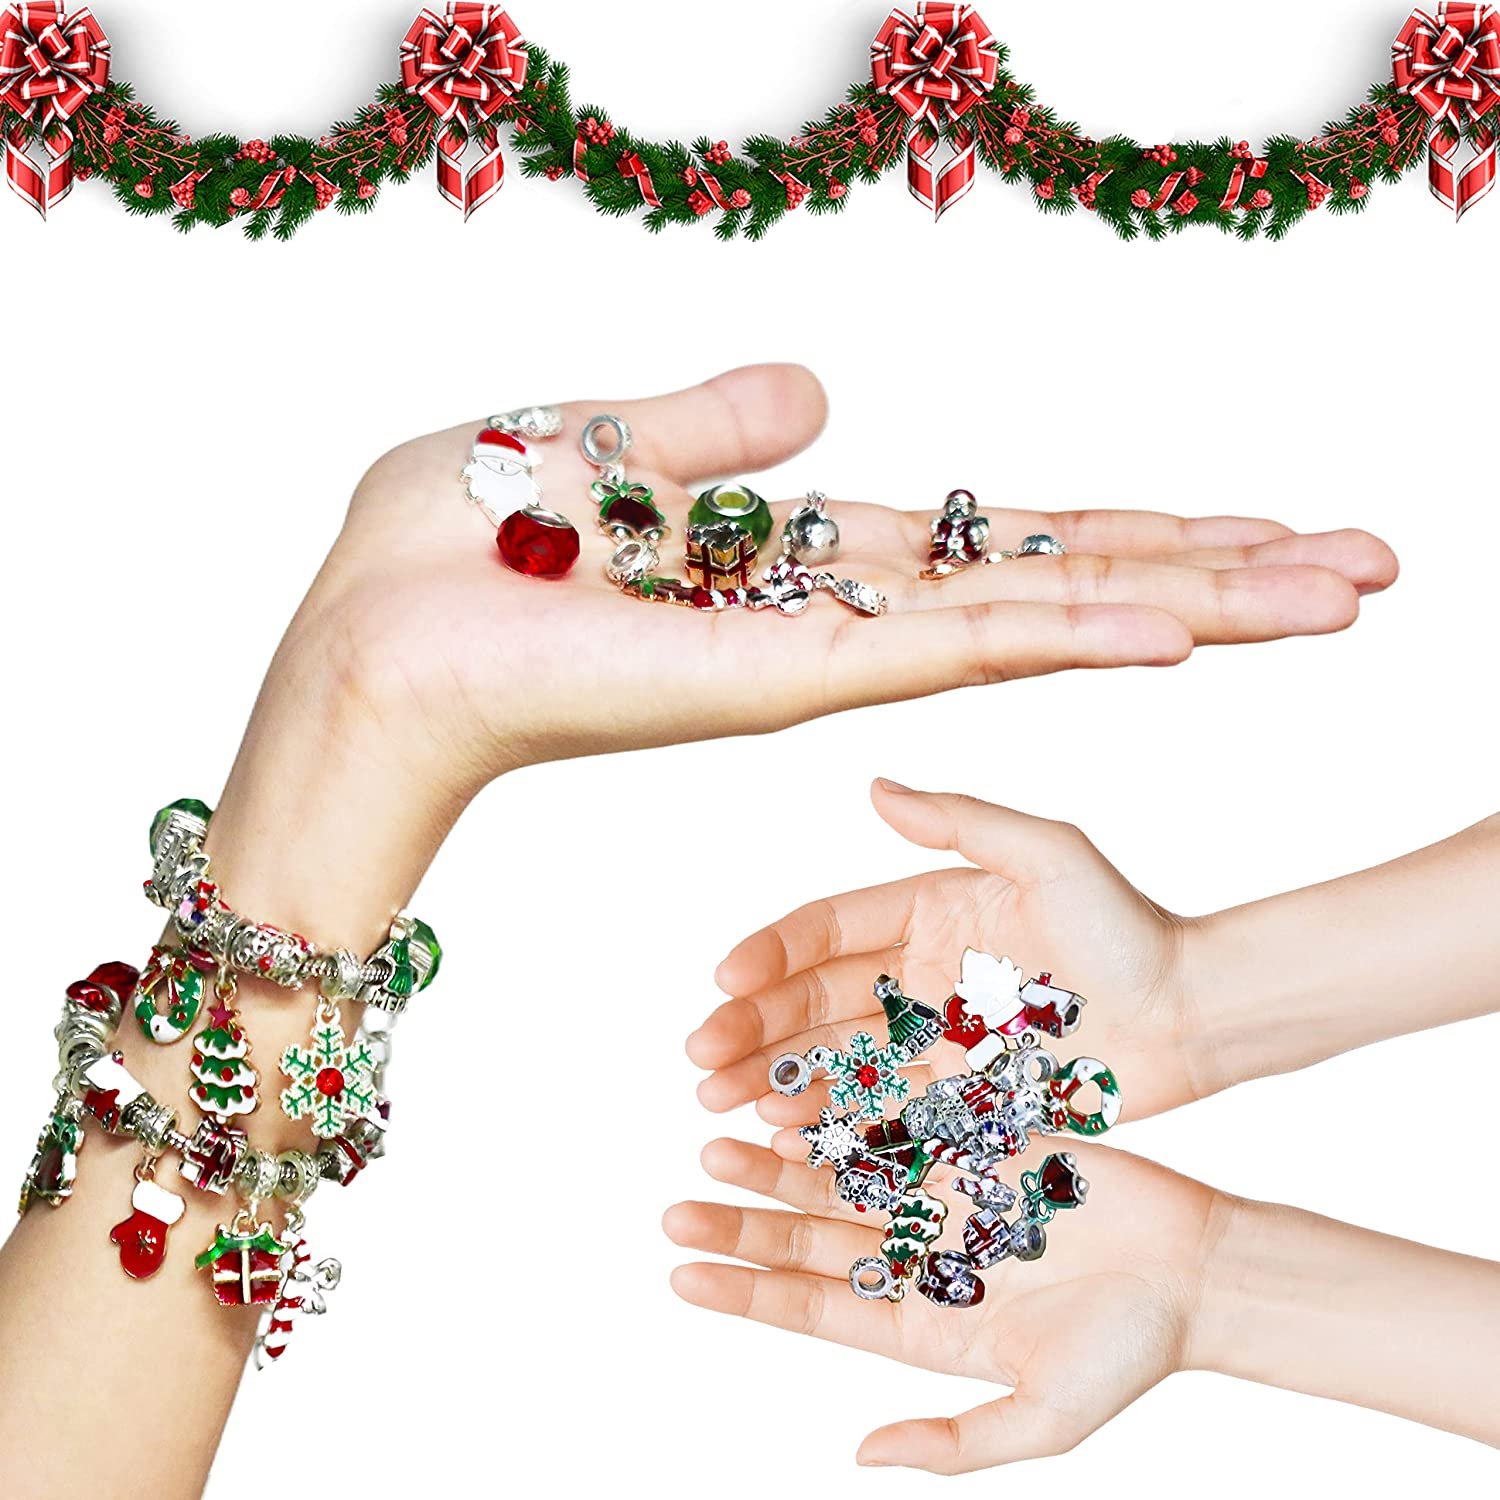 (🎁Early Christmas Sale- 48% OFF🎁) 24 Days Countdown Calendar DIY Christmas Advent Calendar Bracelets Set - Buy 2 Get EXTRA  5% OFF & FREE SHIPPING